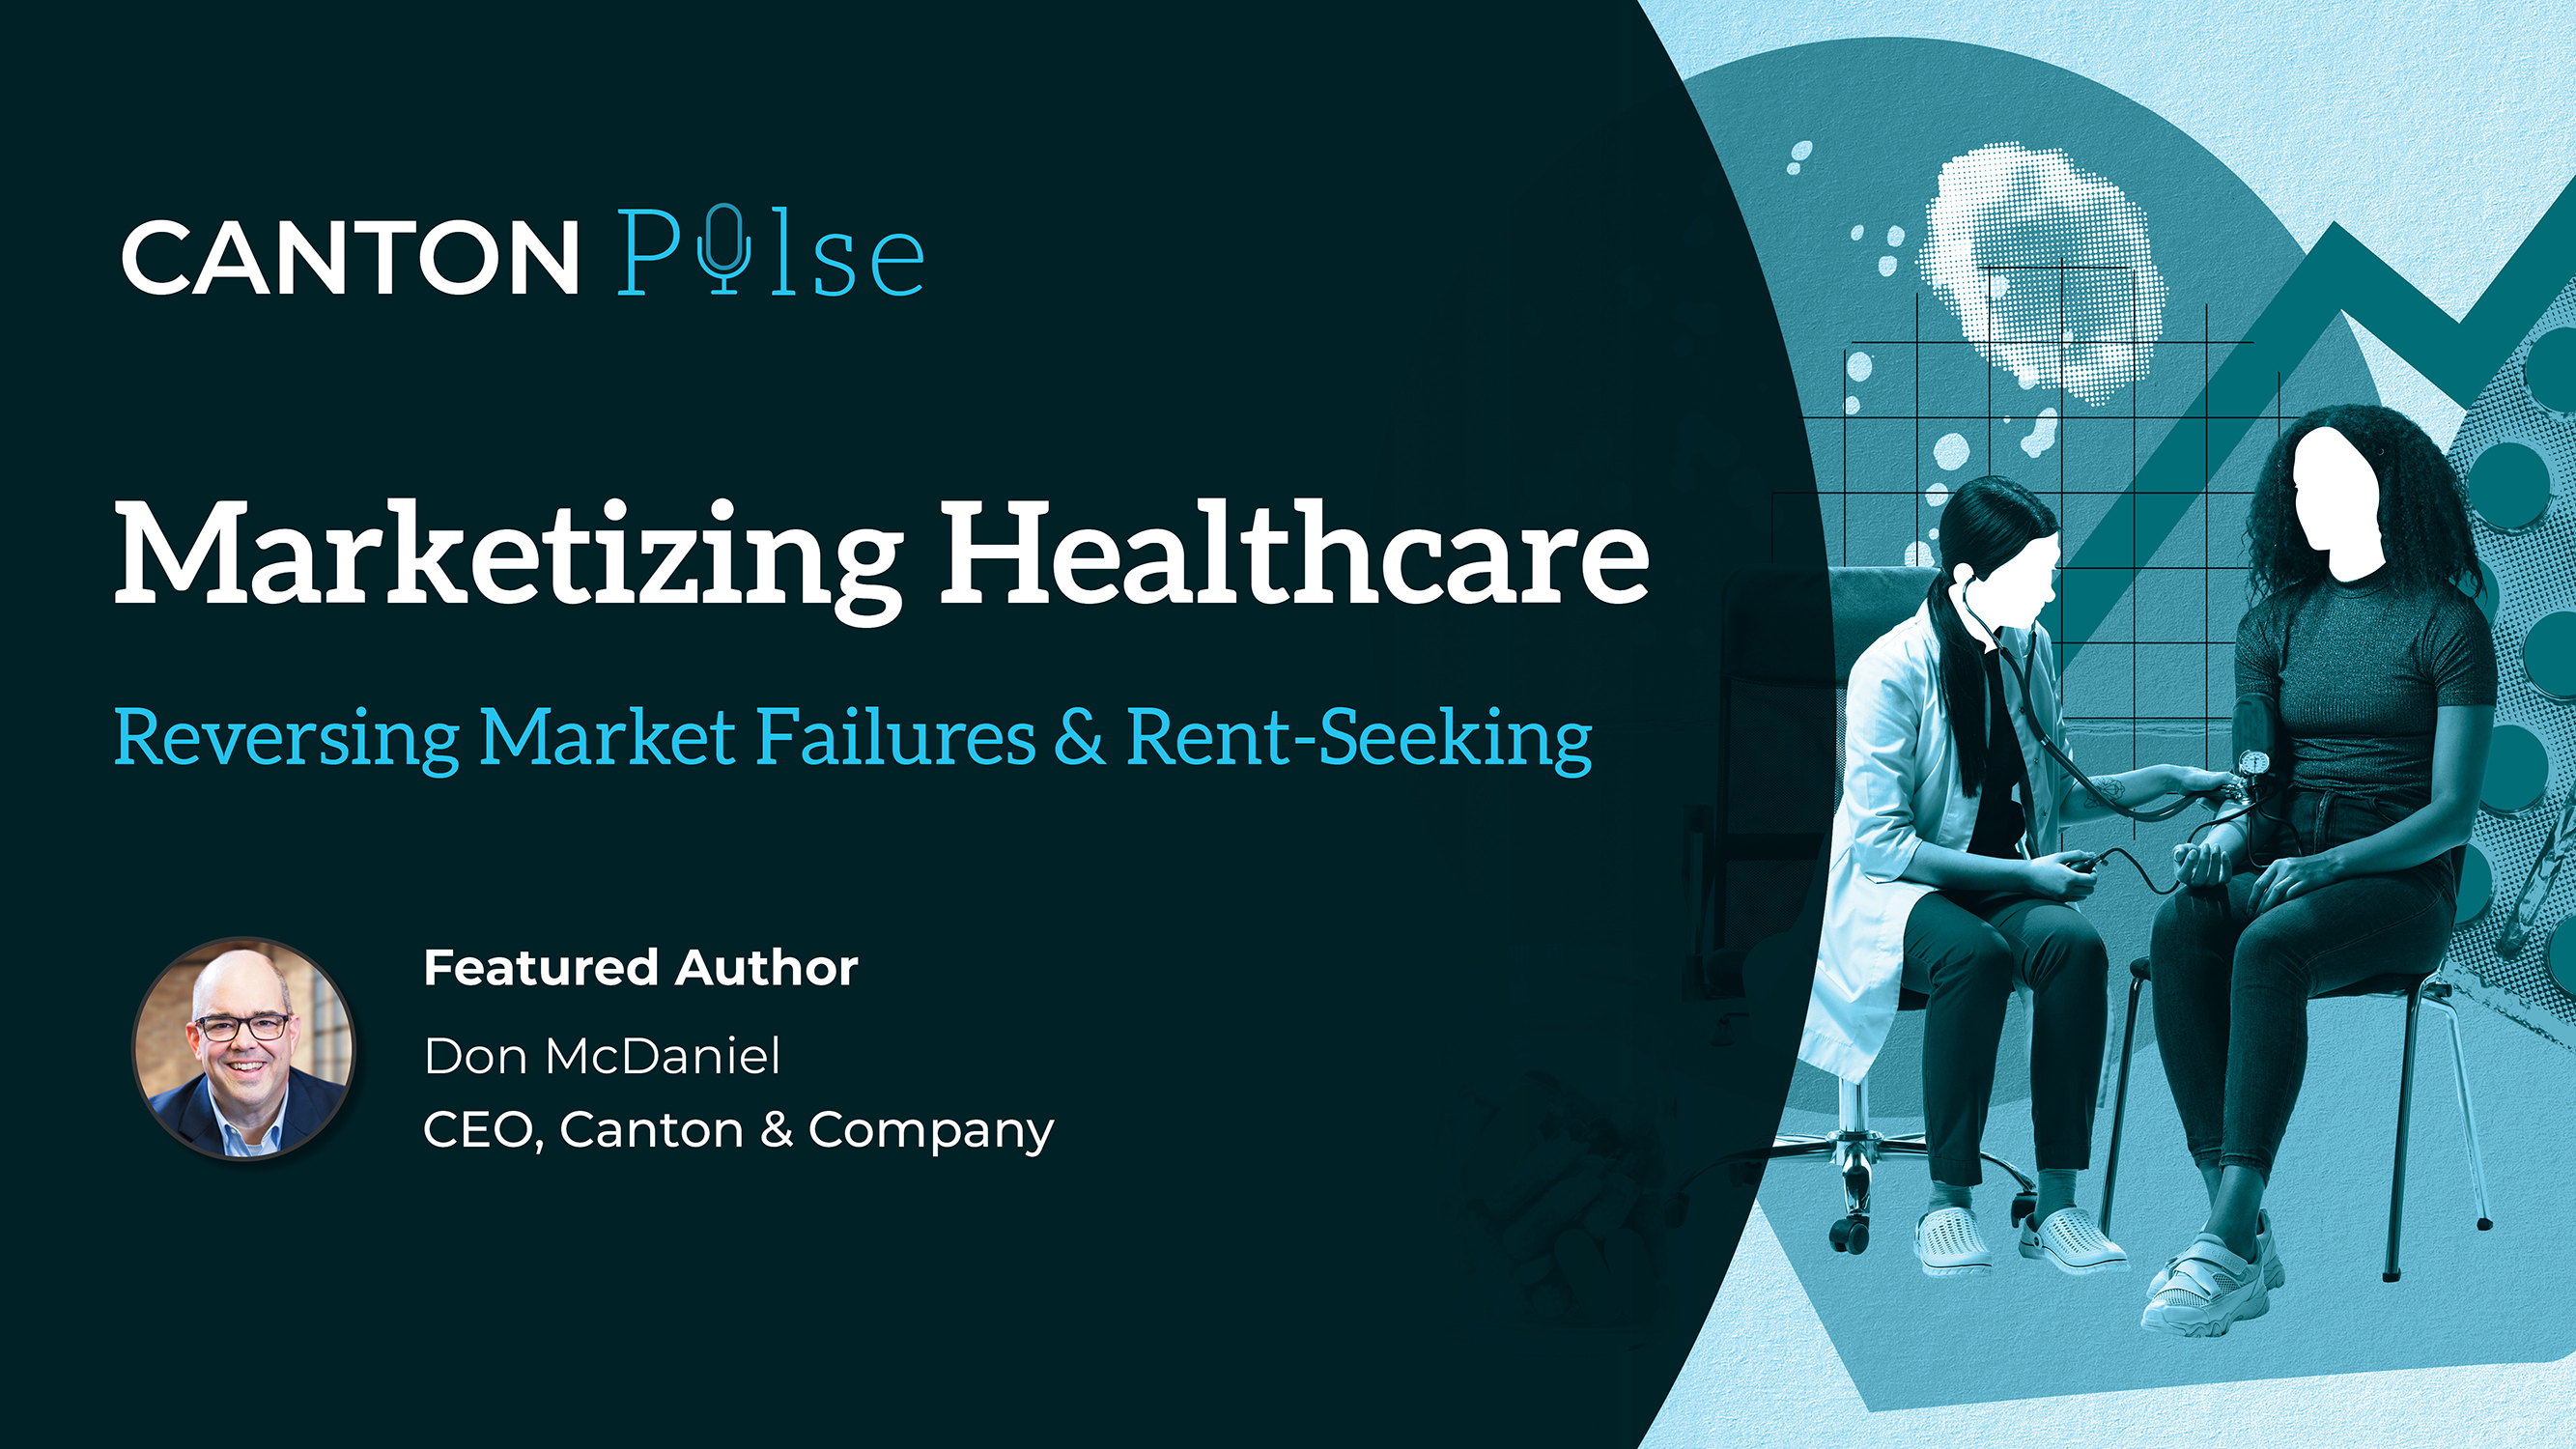 marketizing healthcare by Canton & Company